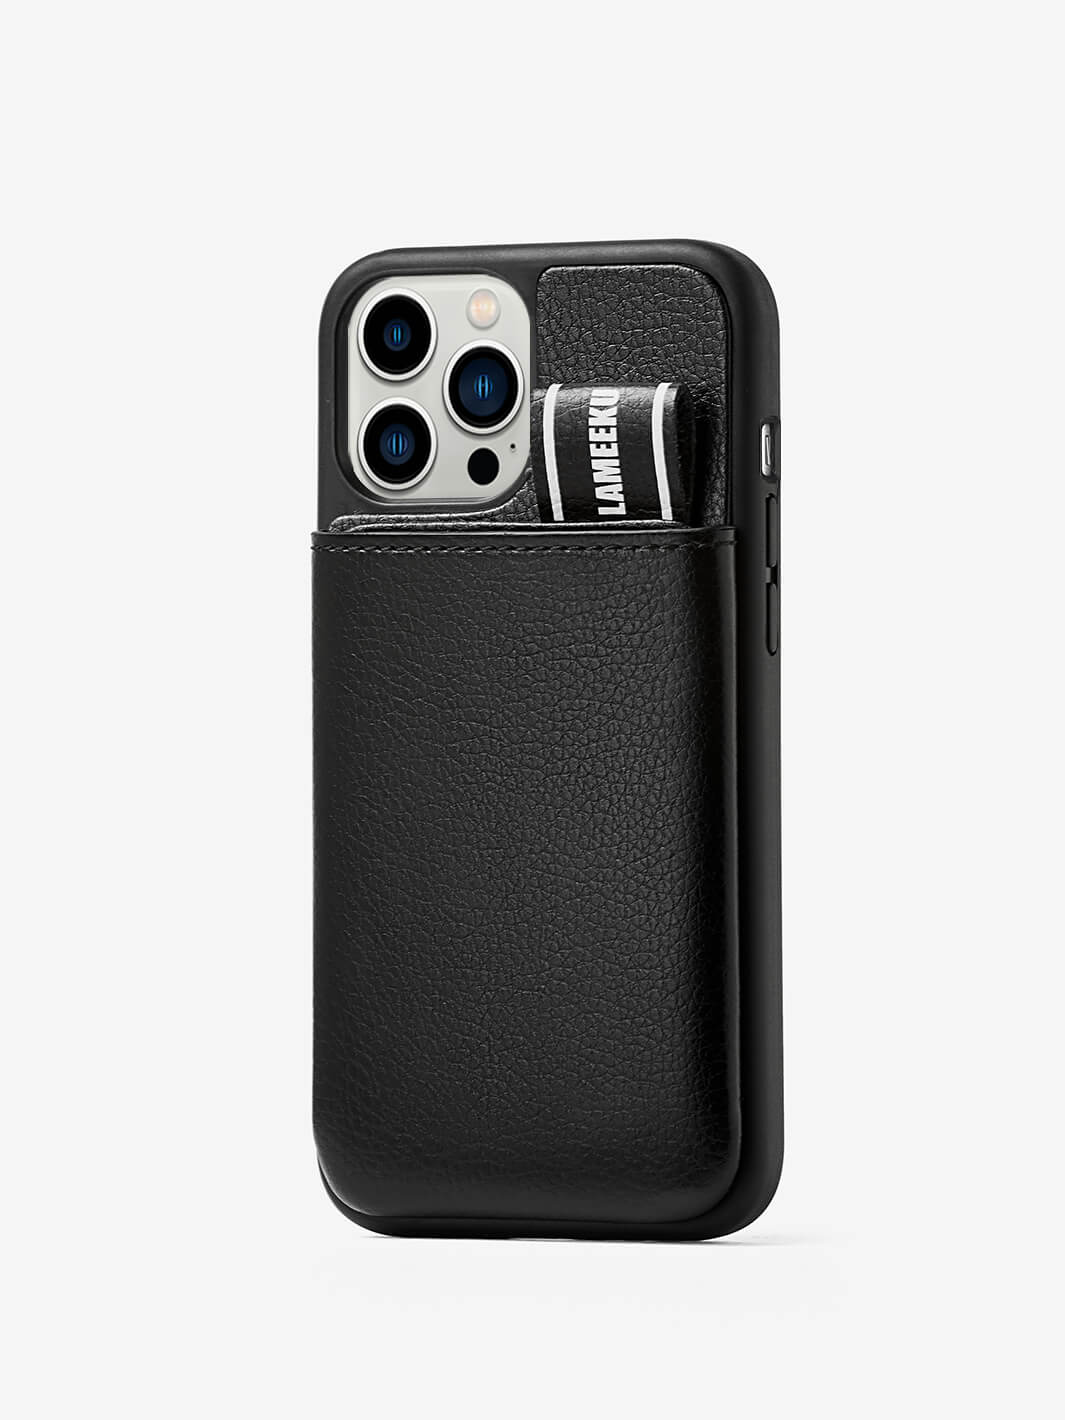 Custype phone case phone cover in black2